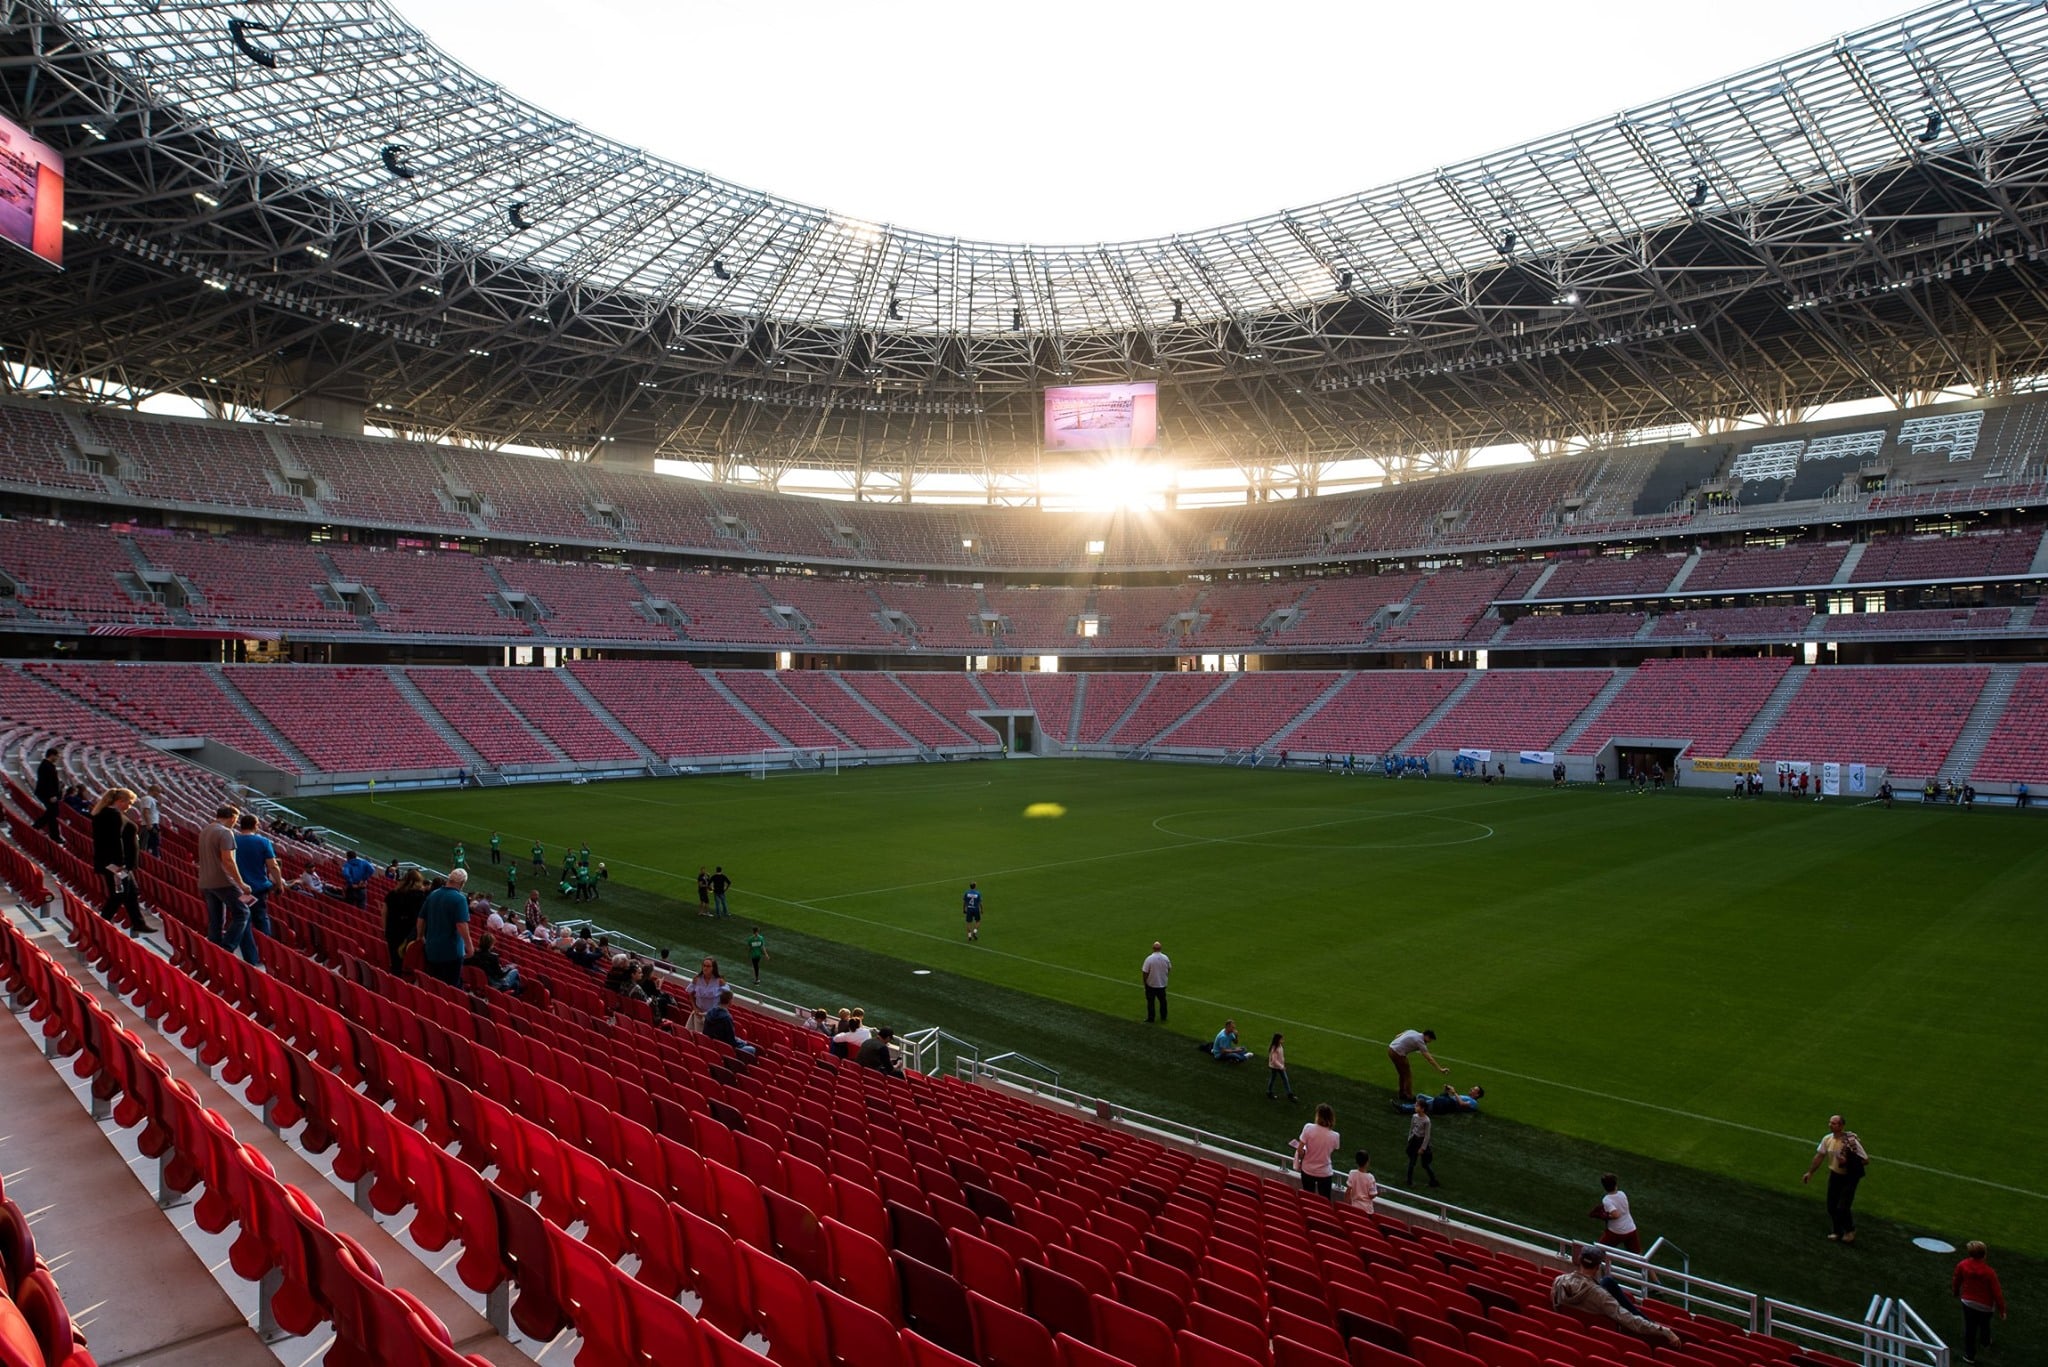 stadion puskás aréna stadion budapest ungaria